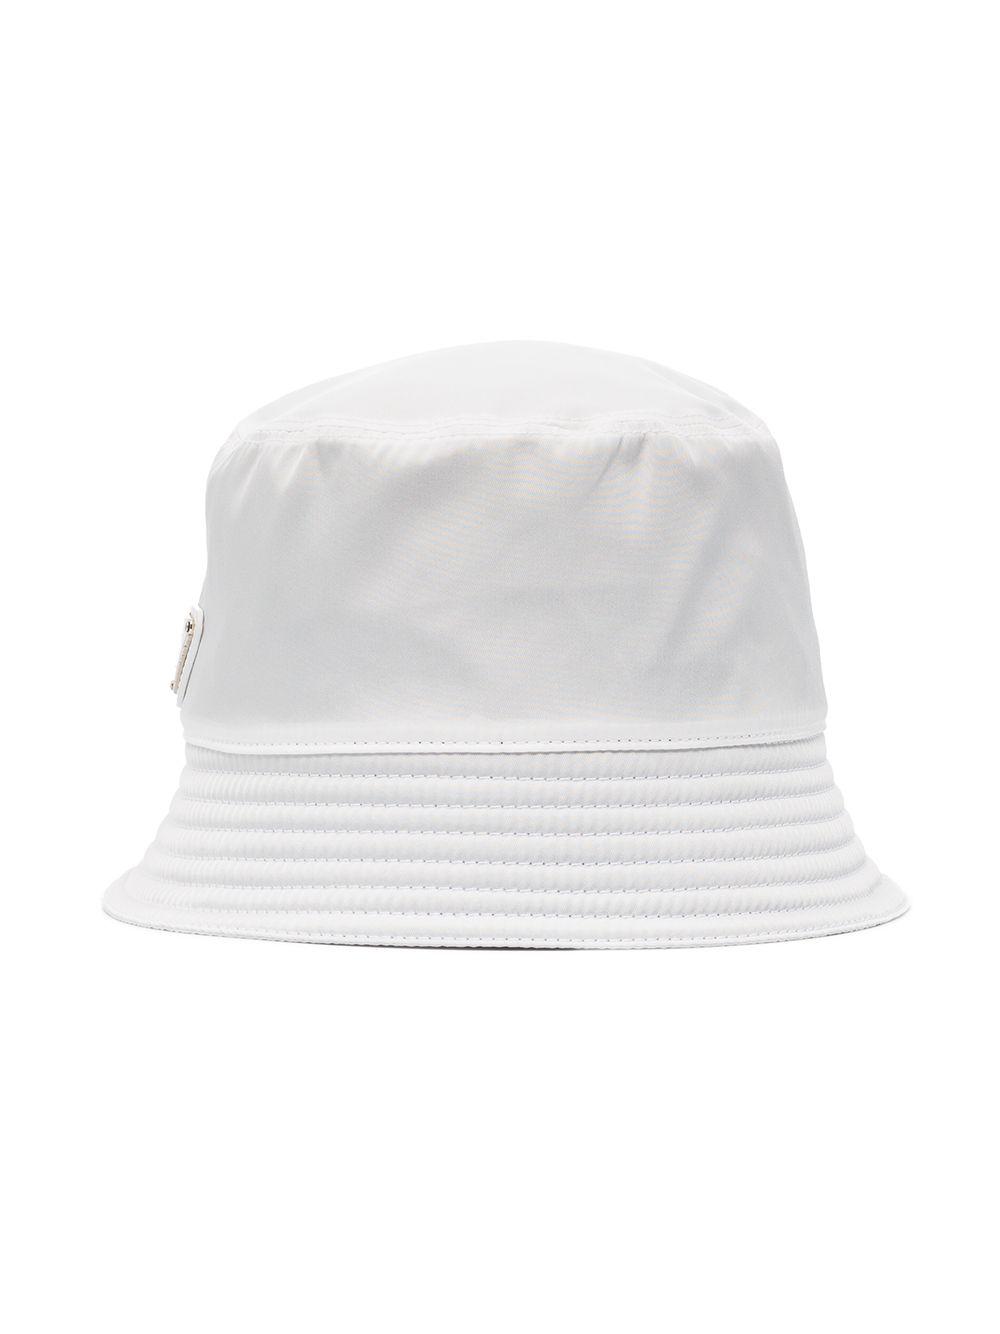 Prada Cotton Nylon Logo Bucket Hat In White for Men - Lyst